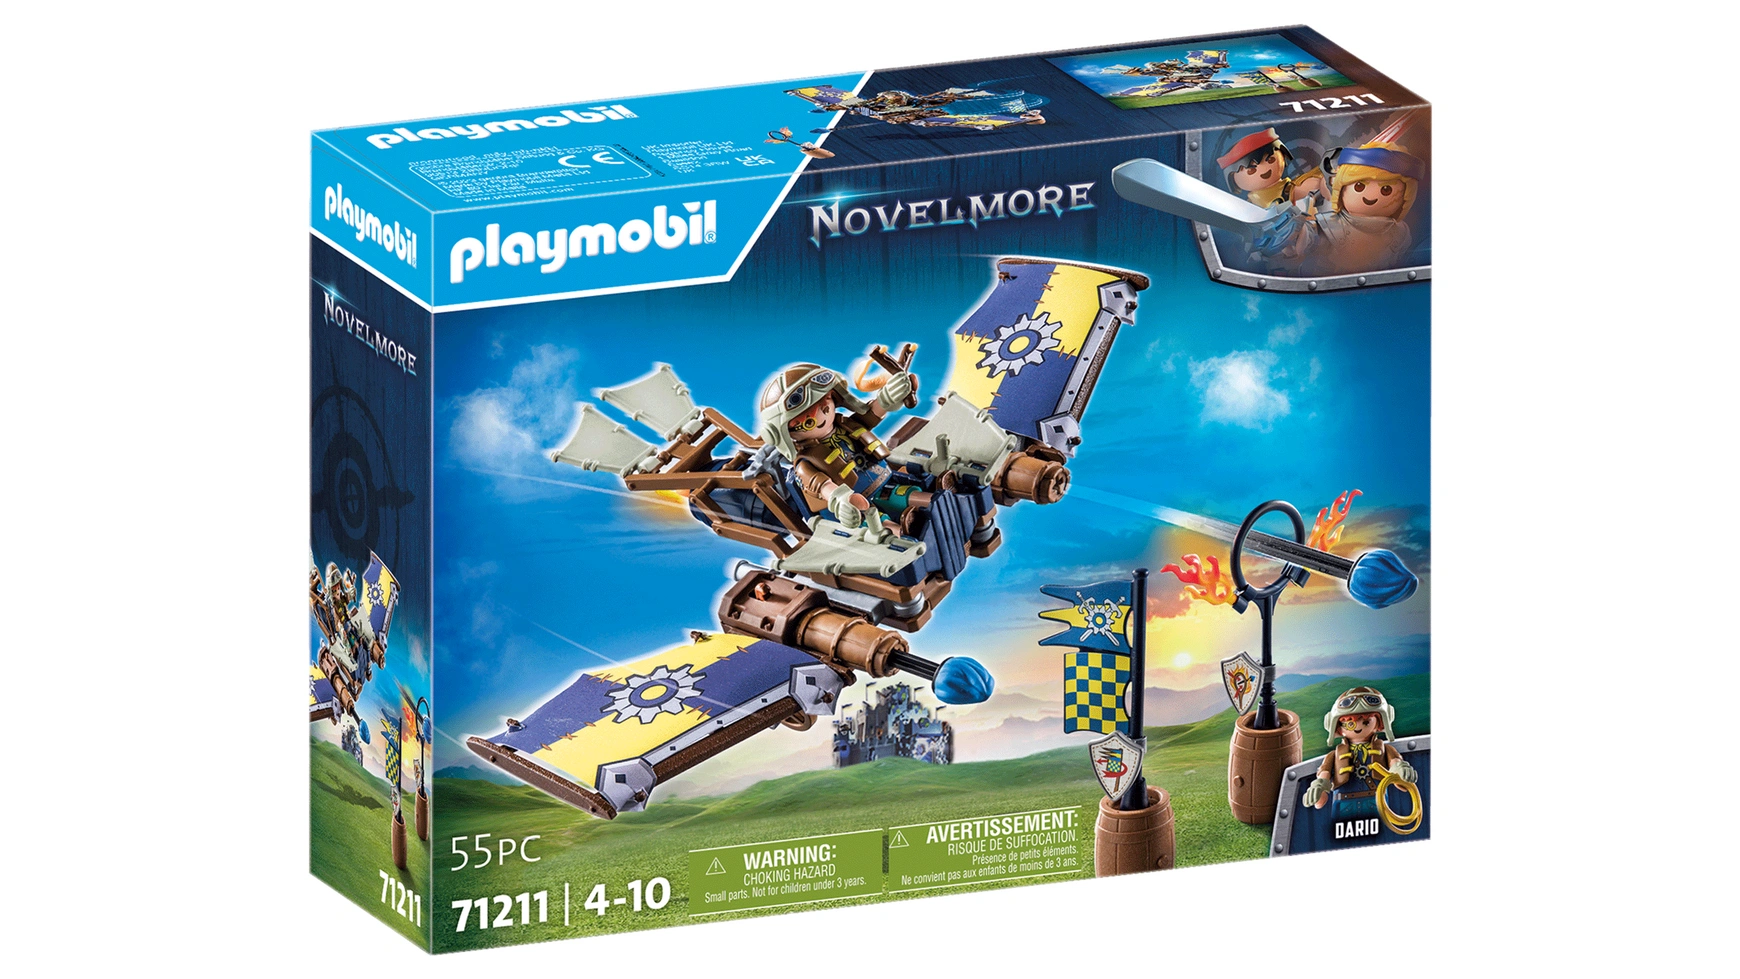 Novelmore планер дарио Playmobil